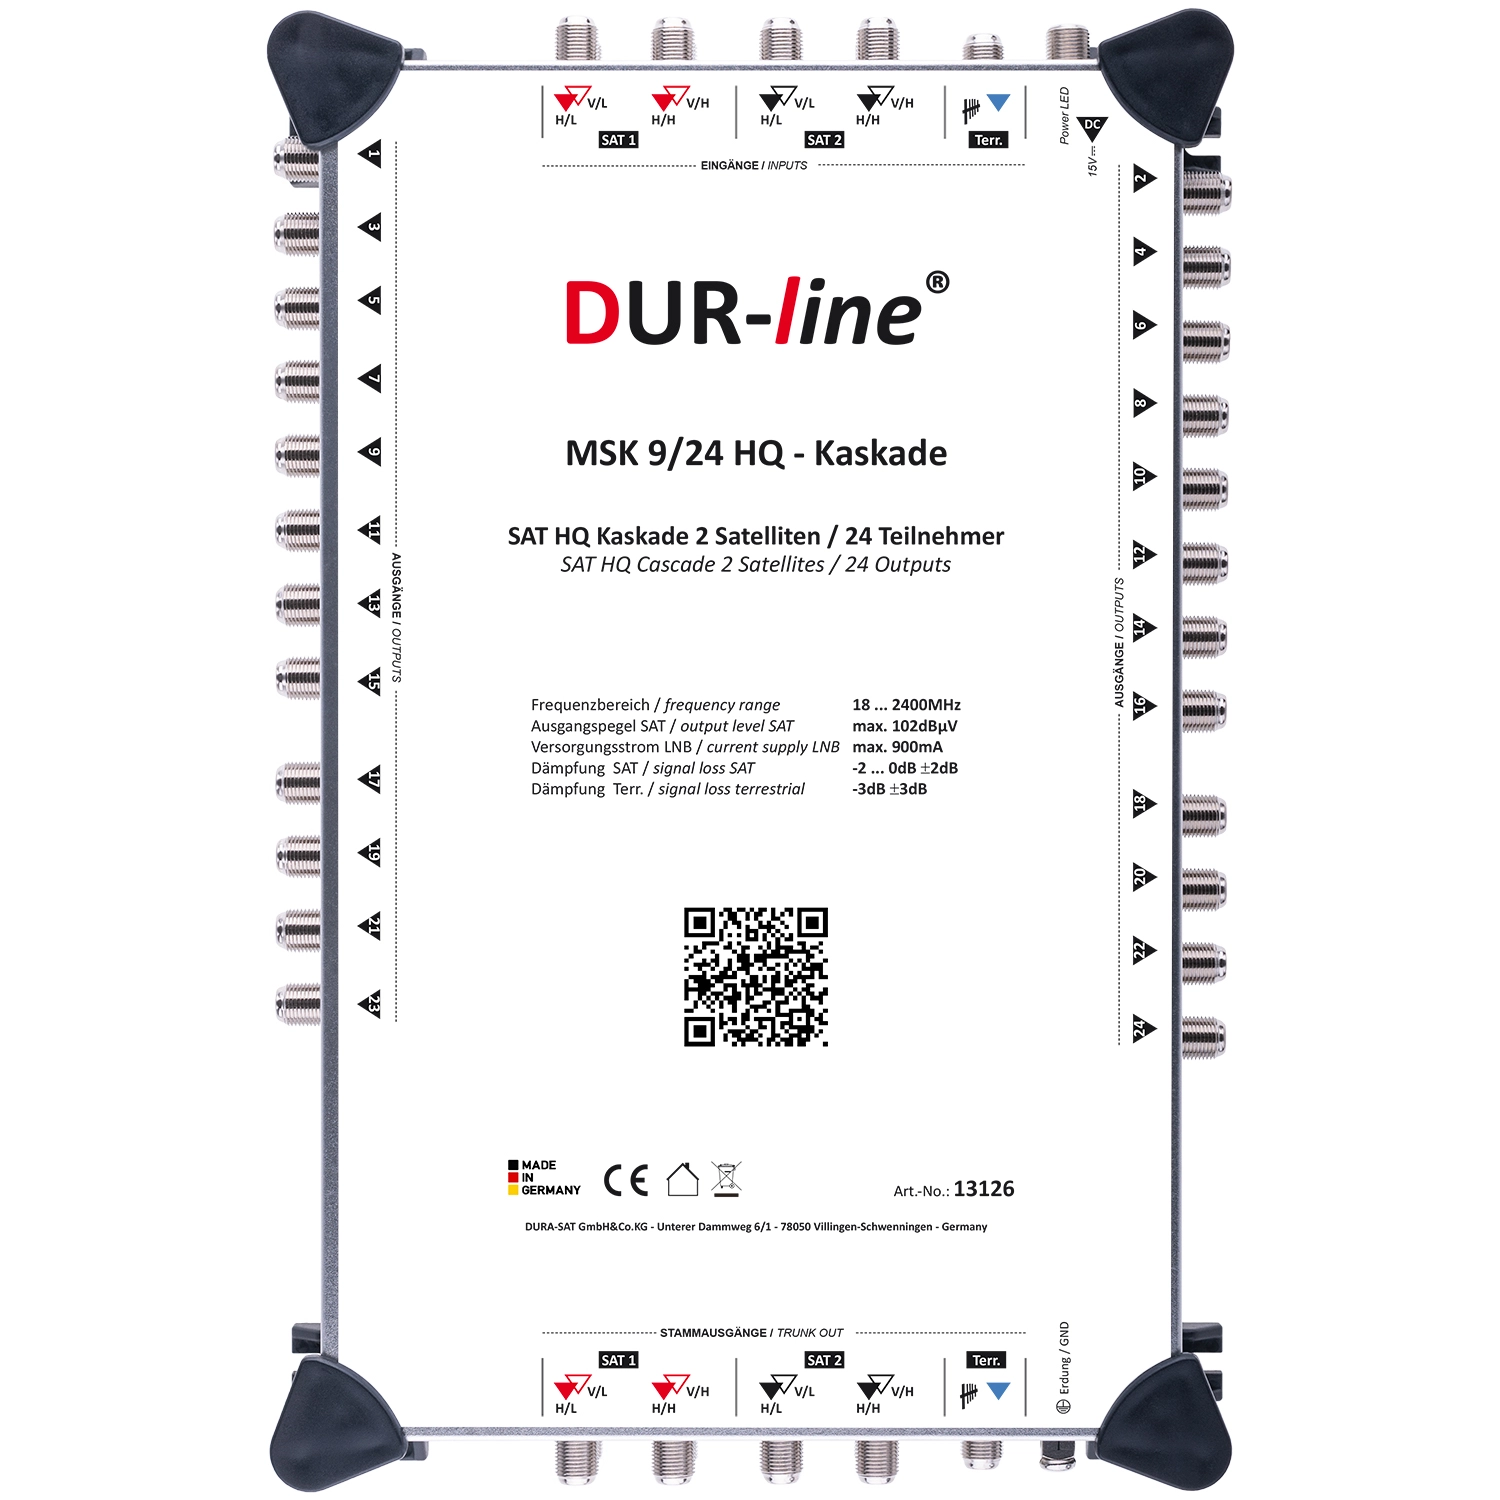 DUR-line MSK 9/24 HQ - Kaskade